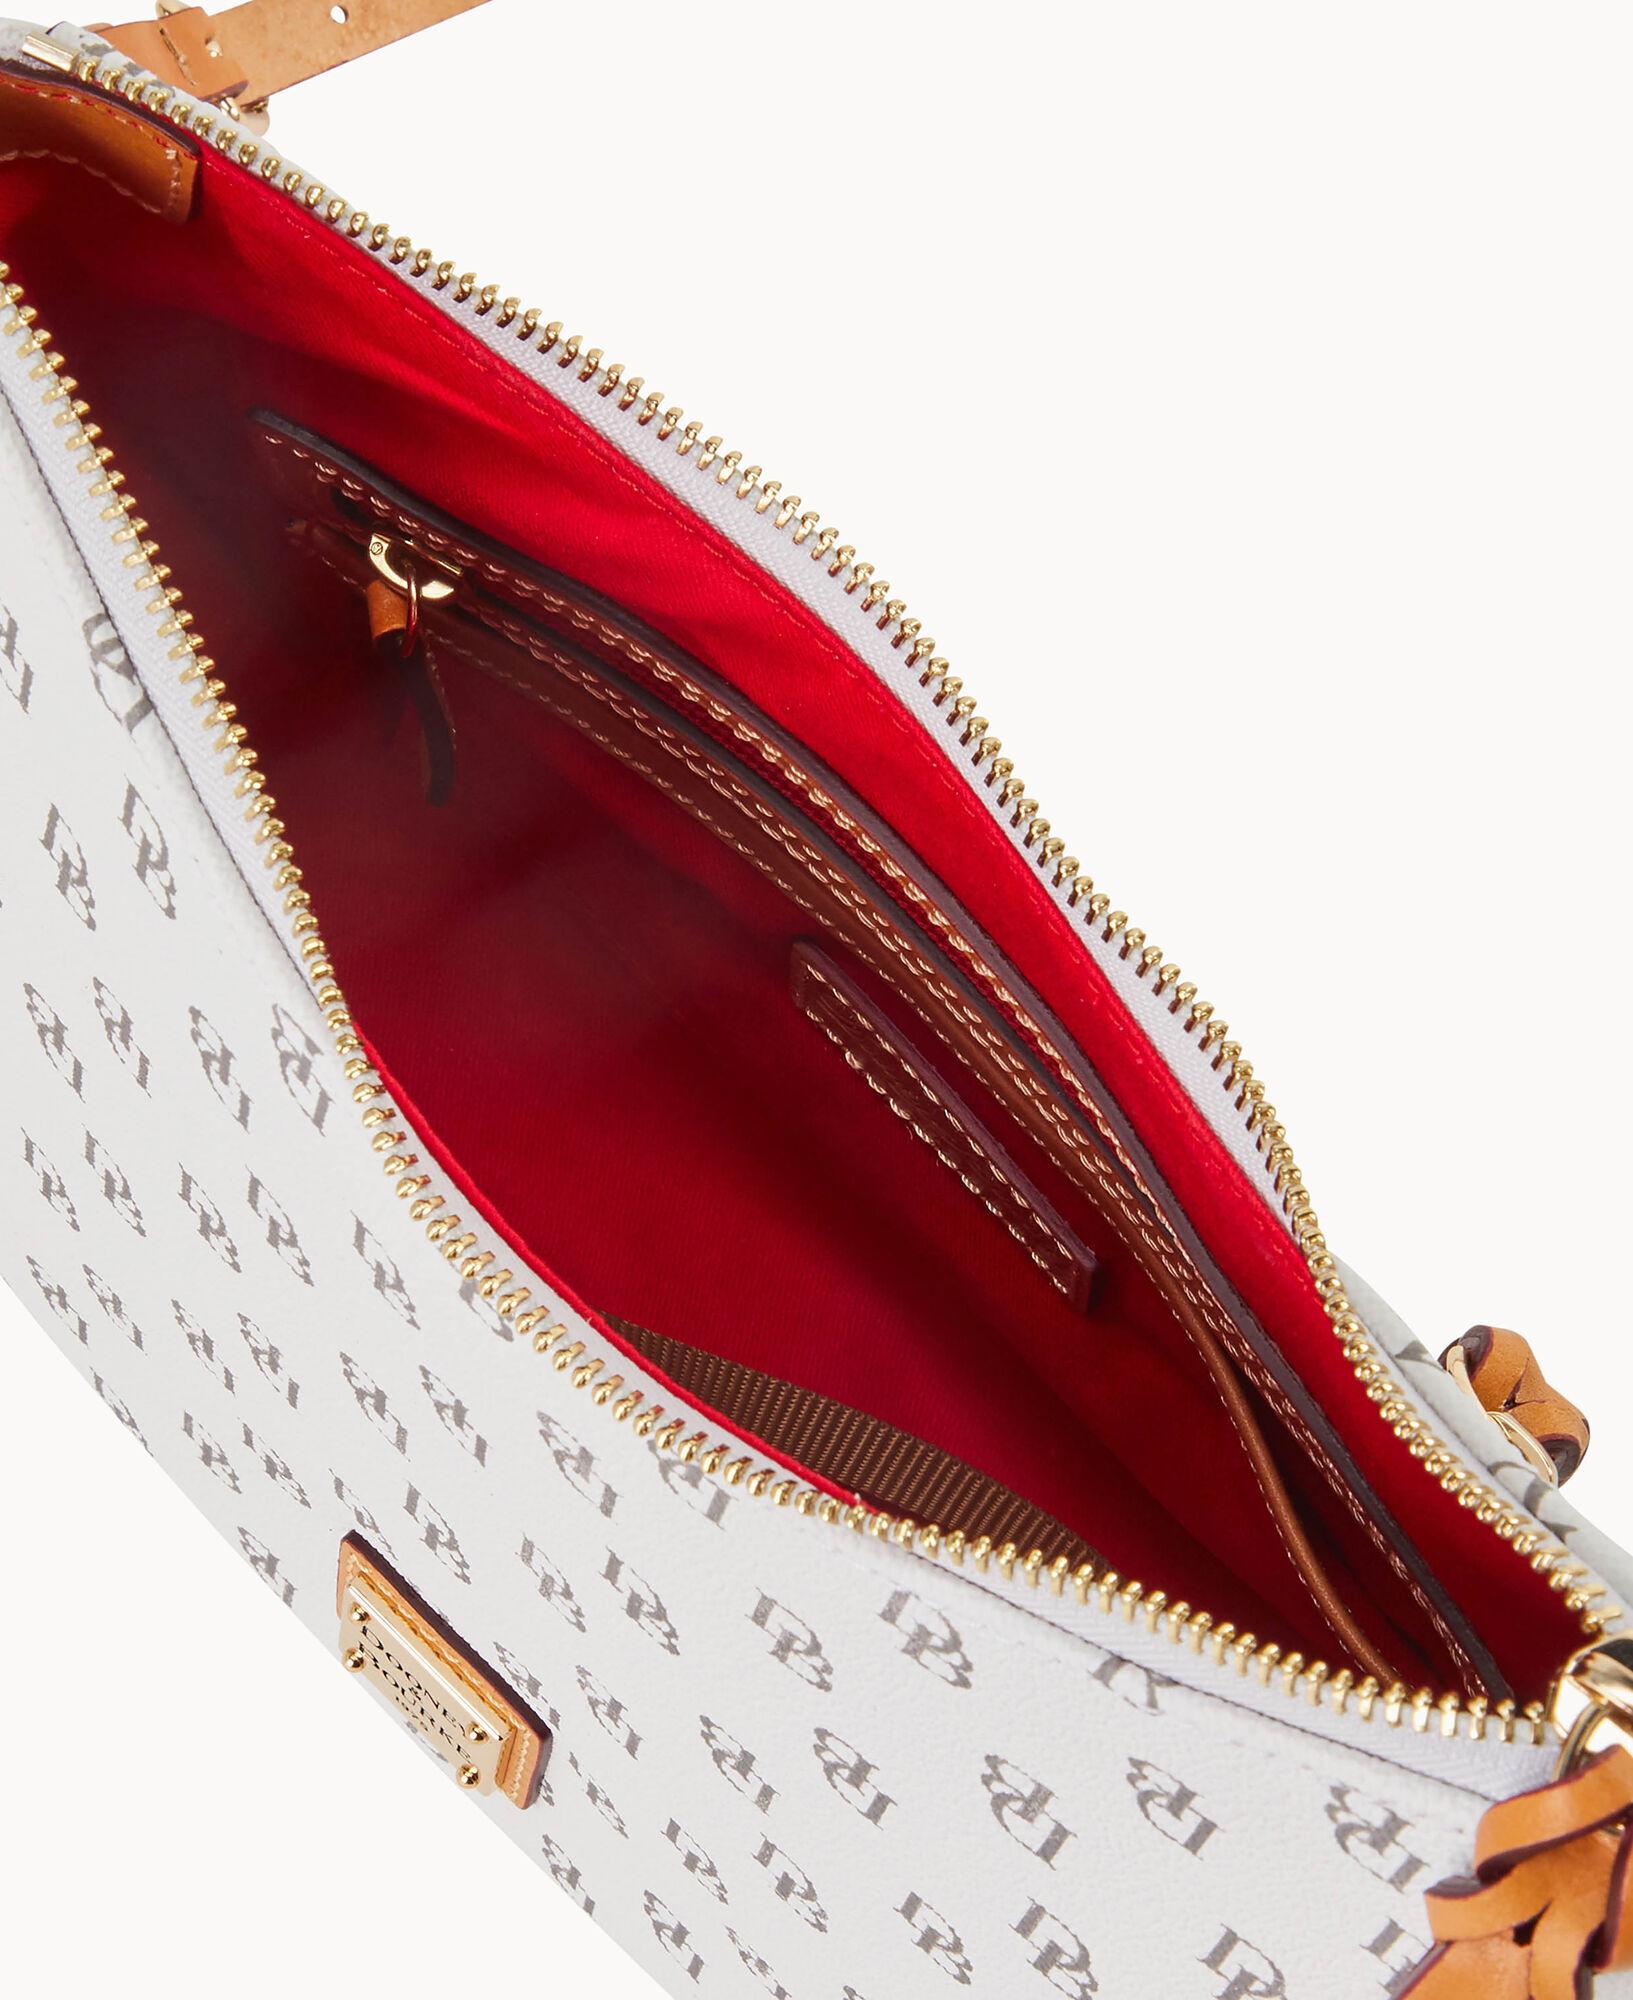 Thoughts on Dooney & Bourke? : r/handbags